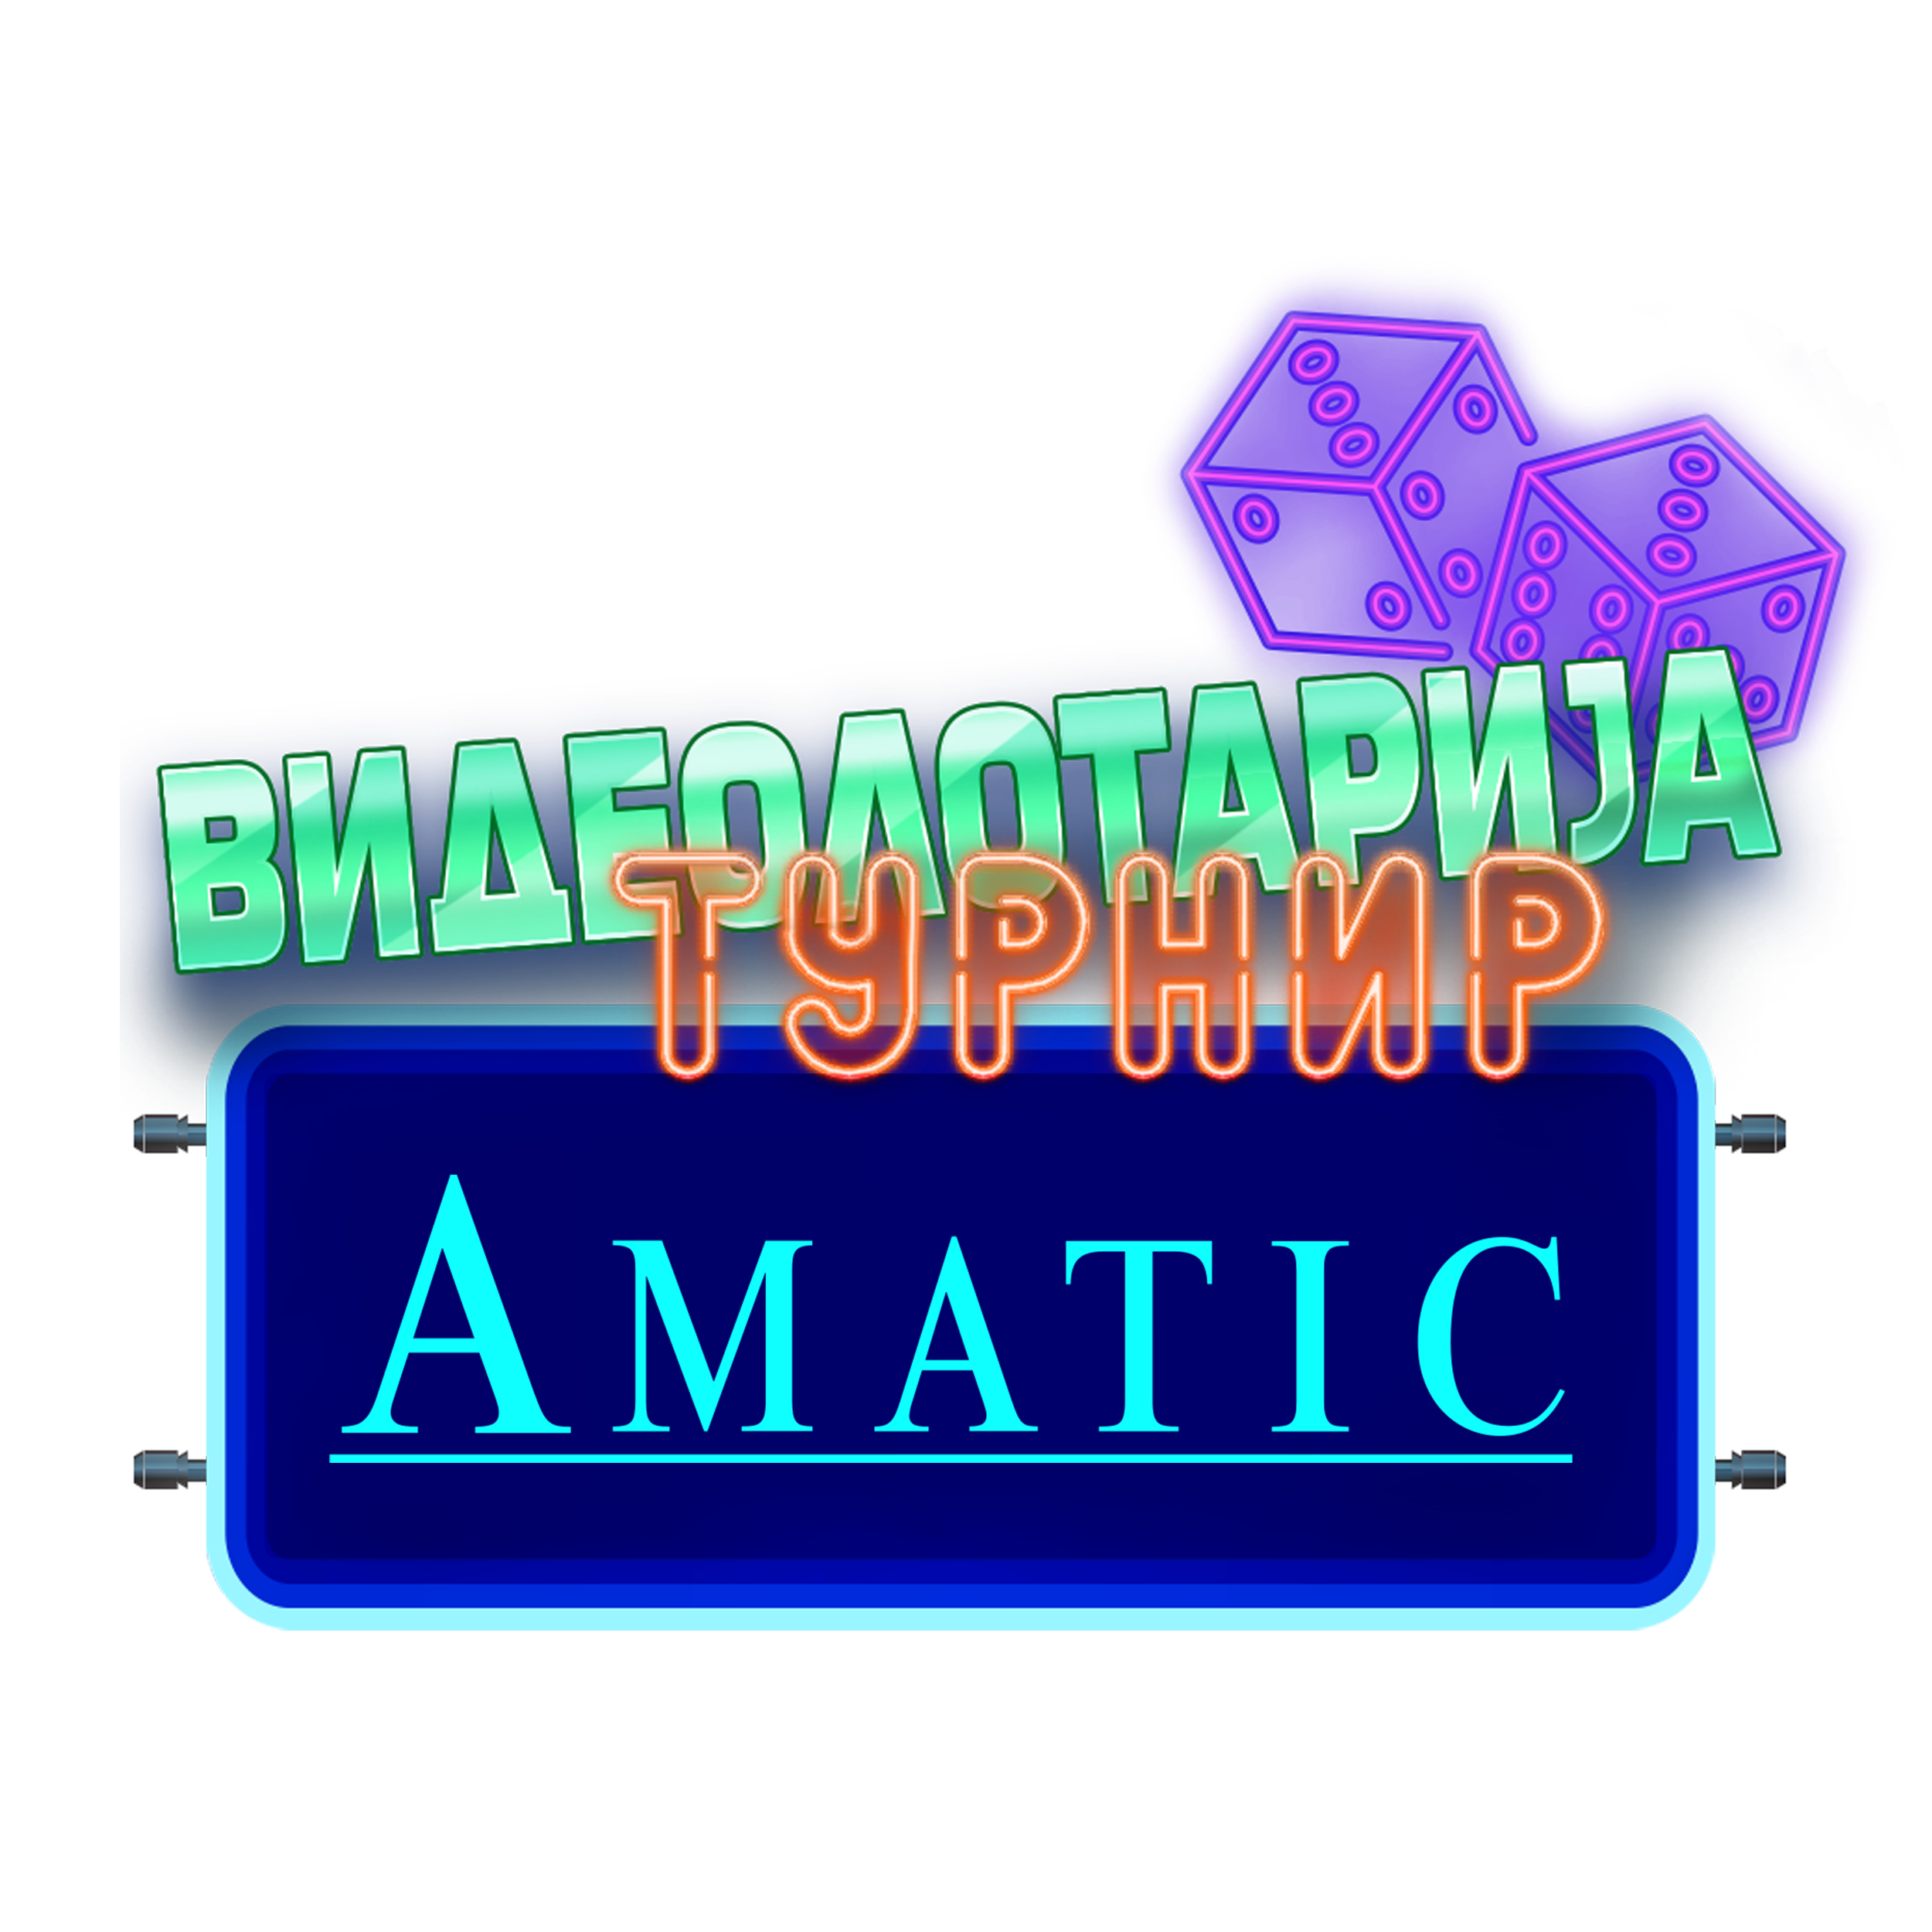 Amatic - Видеолотариjа Турнир